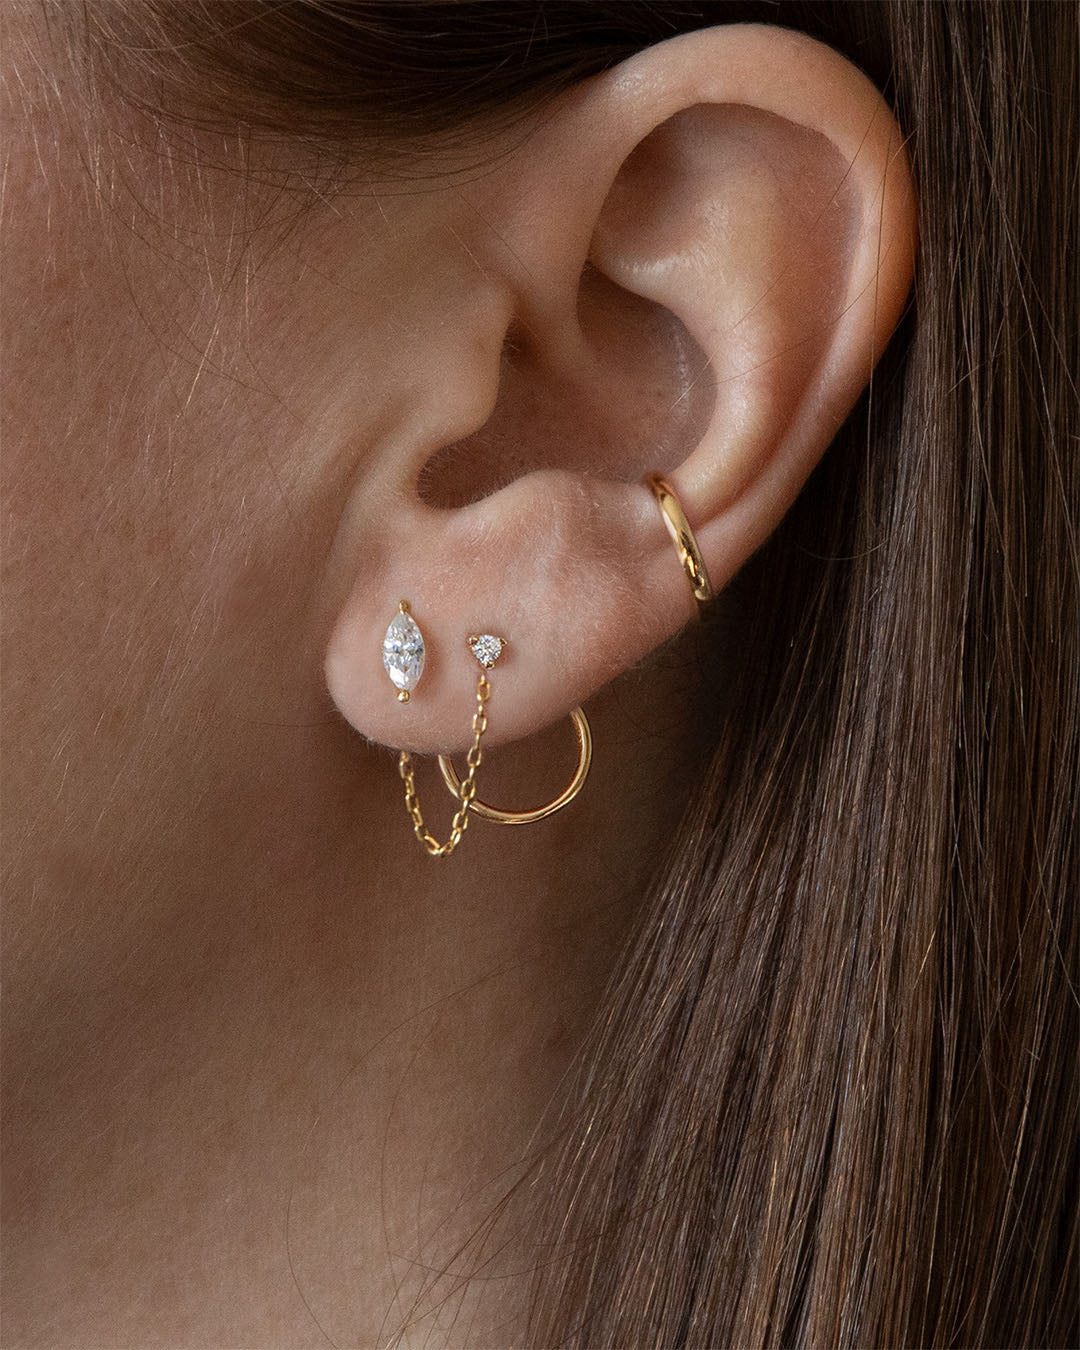 16g Flower leaf cartilage earring, CZ stud earrings, helix conch ear  piercing jewelry, mother of pearl, surgical steel, single earring, sold as  piece - Hi Unni